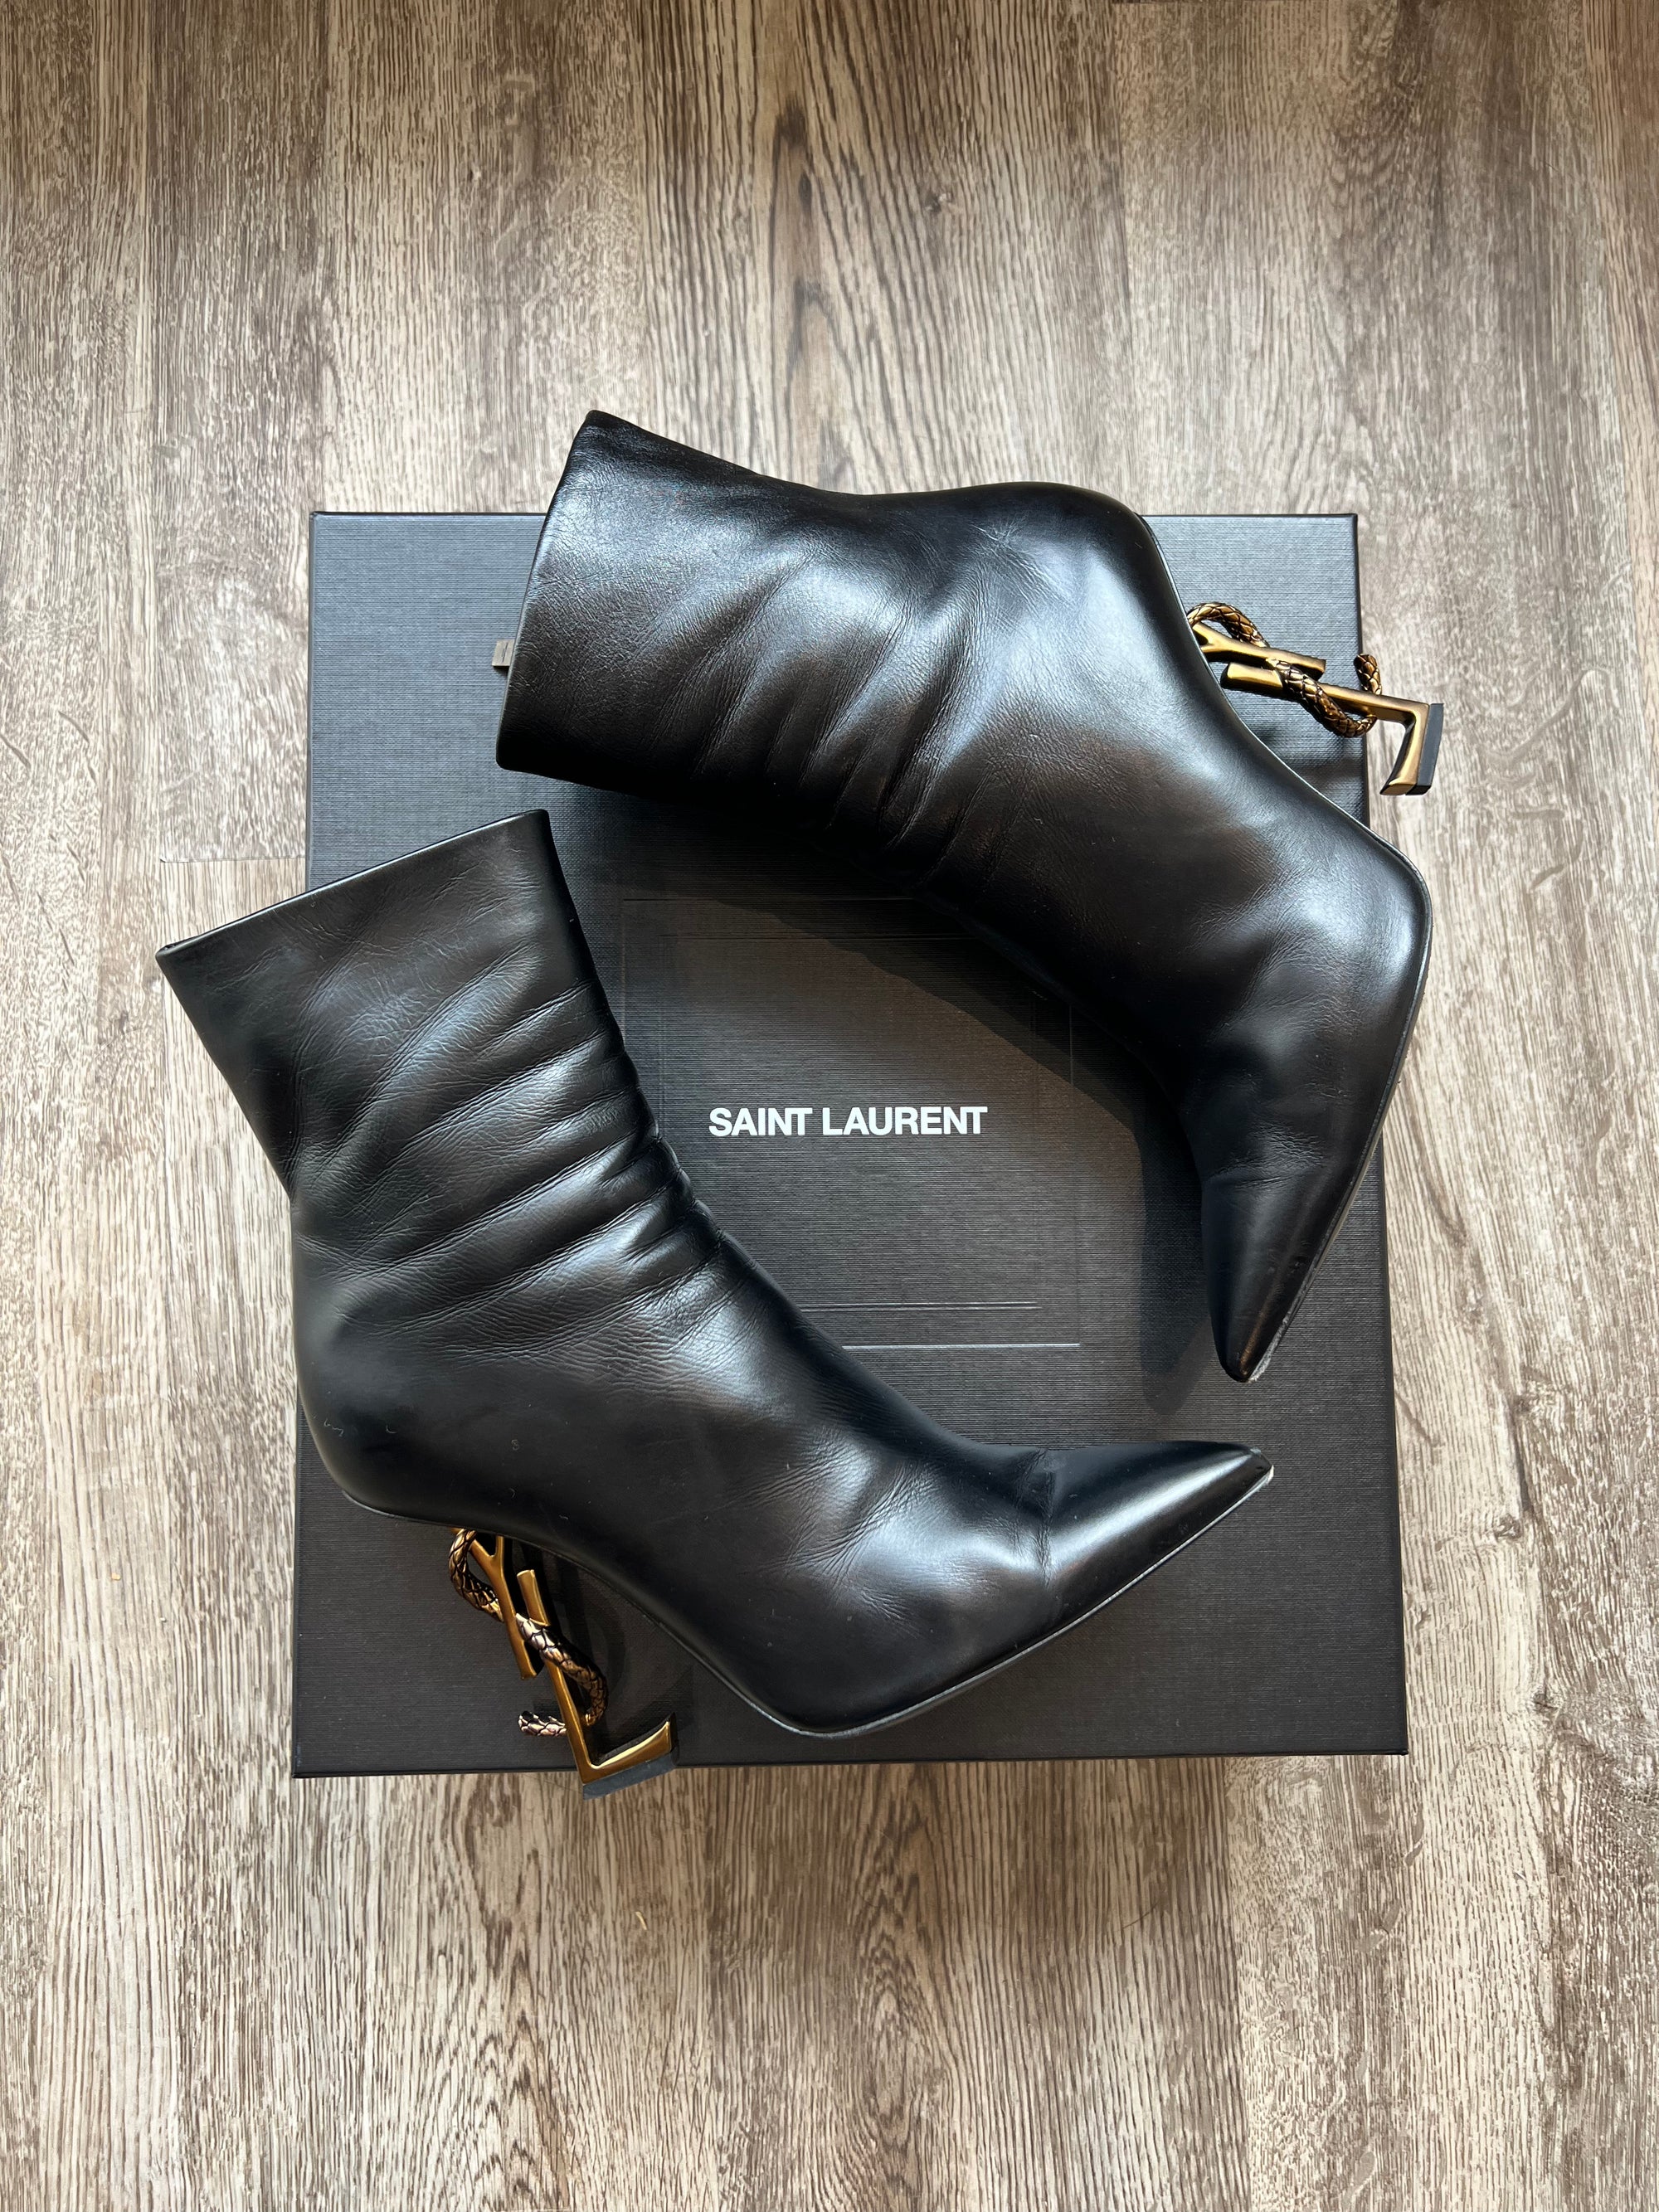 Saint Laurent Paris Opyum Black Bronzed Heel Boots, 37.5